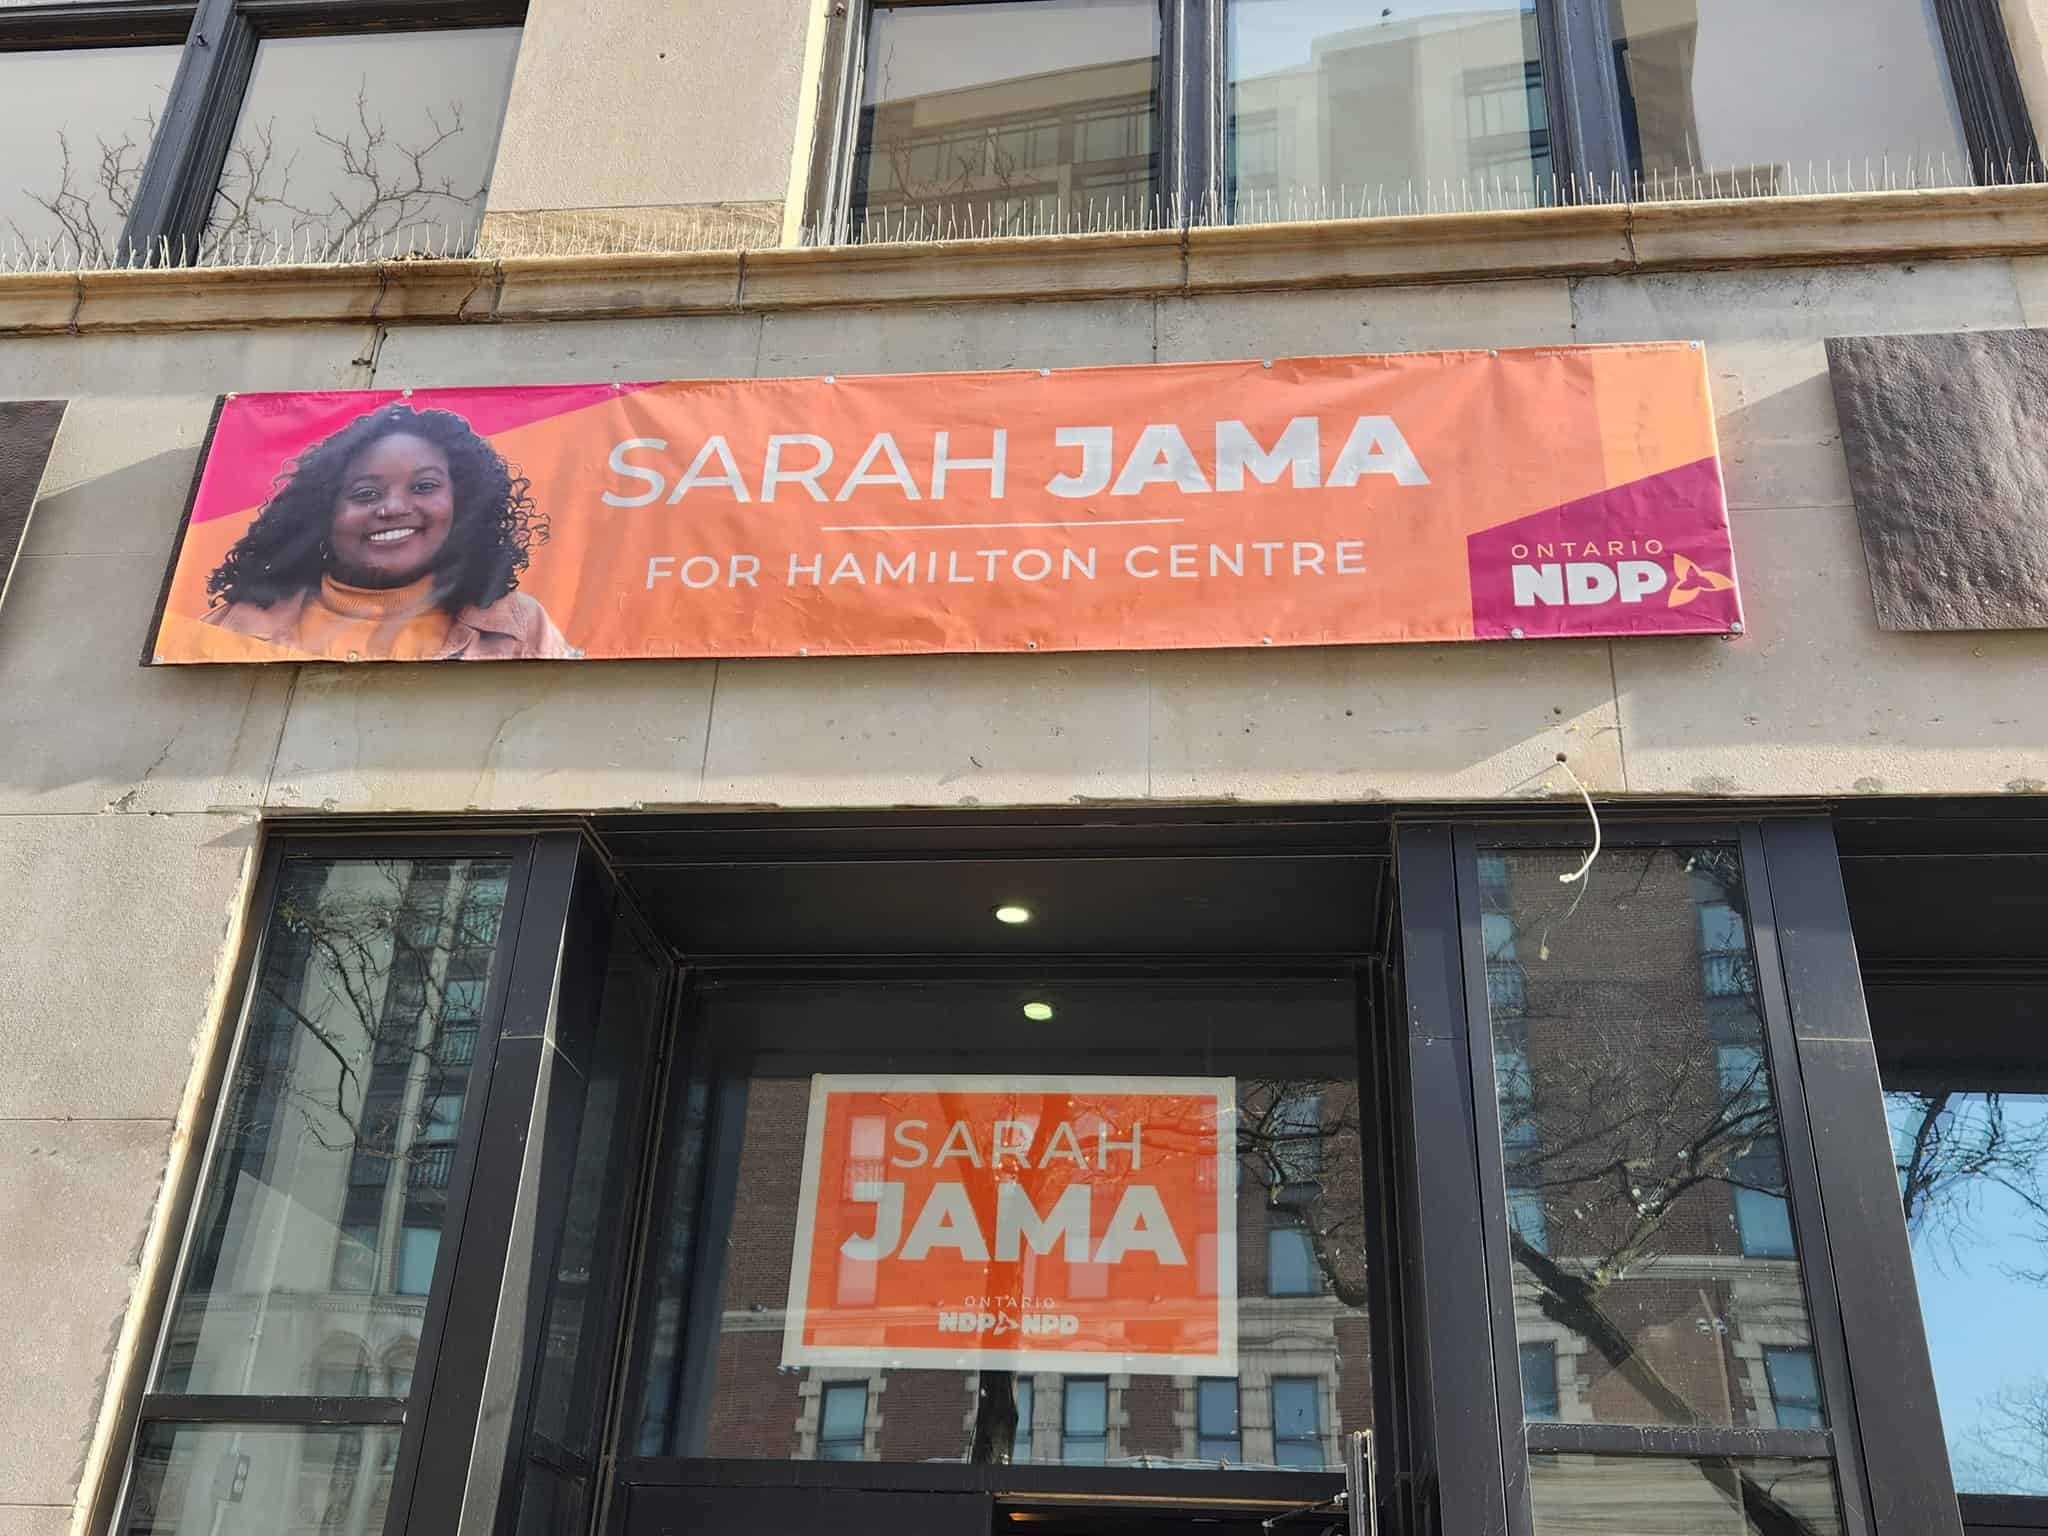 Hamilton Centre MPP Sarah Jama out of NDP caucus marit stiles israel hamas